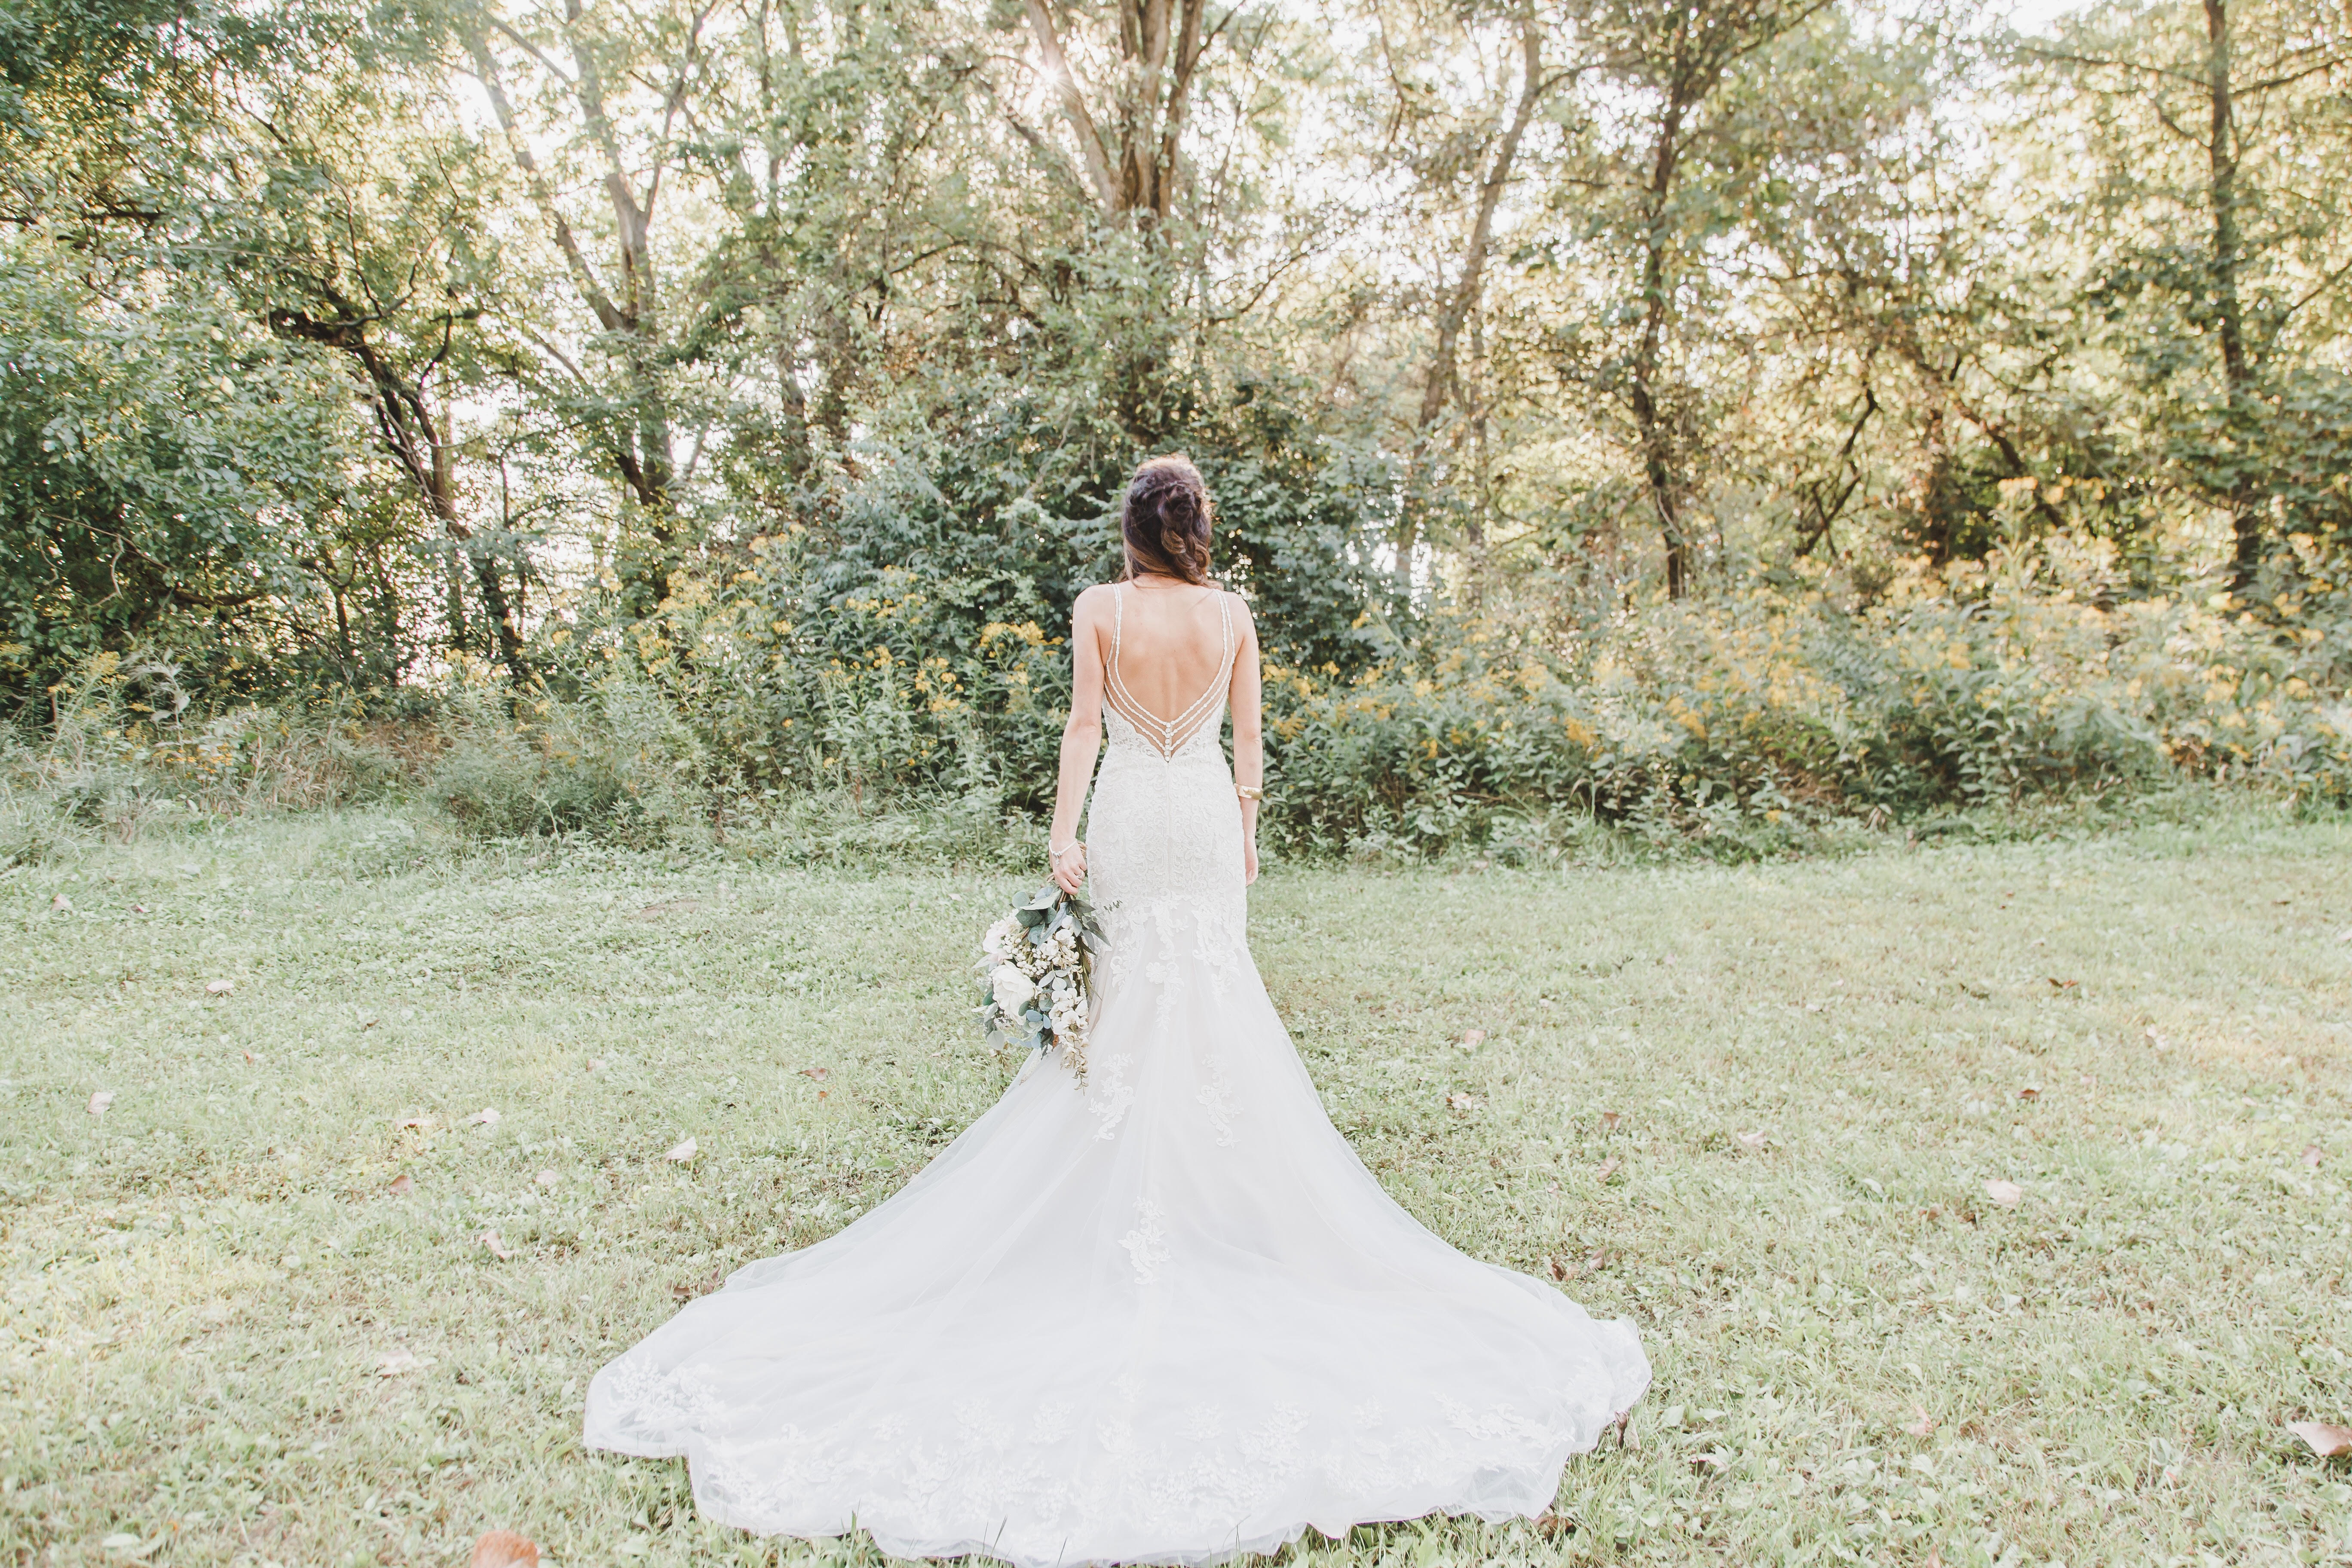 Wedding Dress taken by Nuxoll Photography